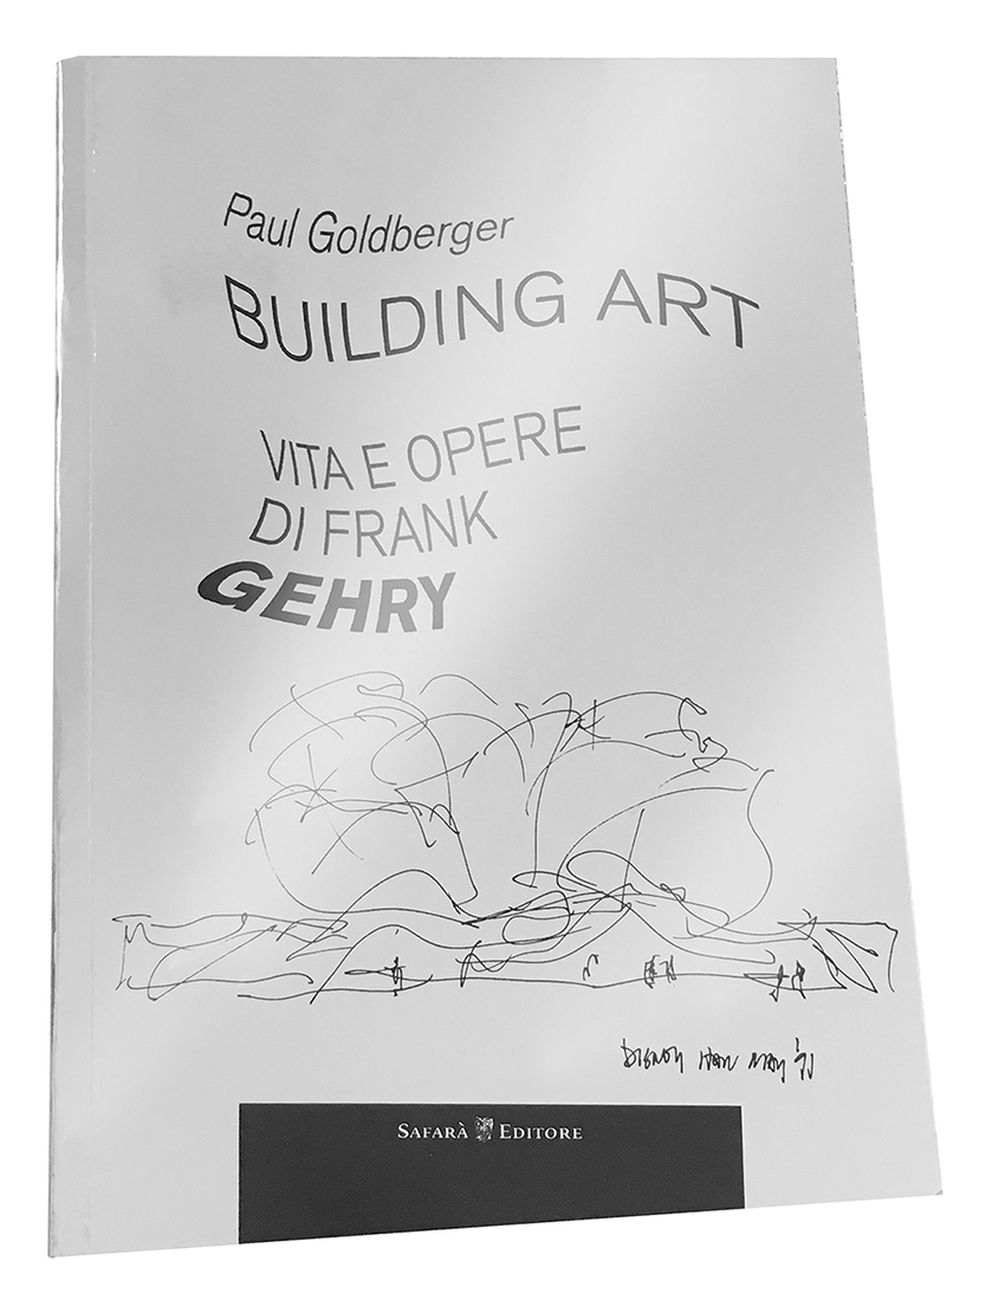 Paul Goldberger – Building Art (Safarà, Pordenone 2018)